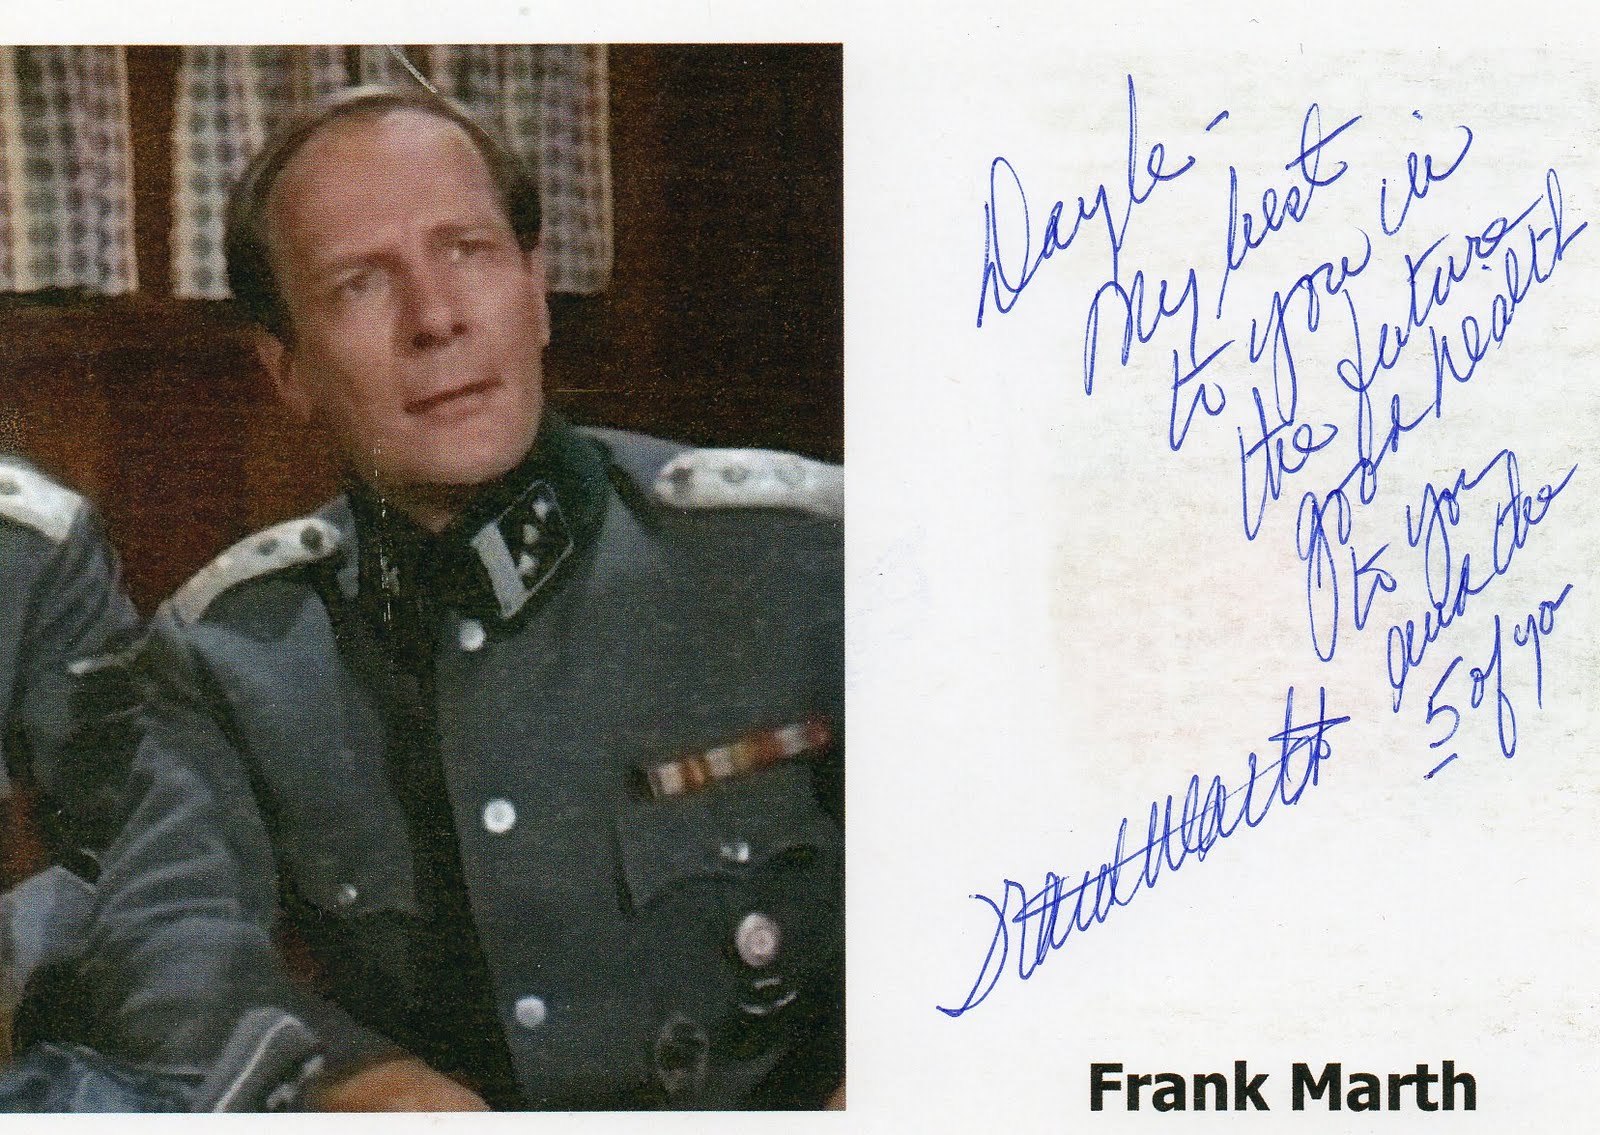 Frank Marth